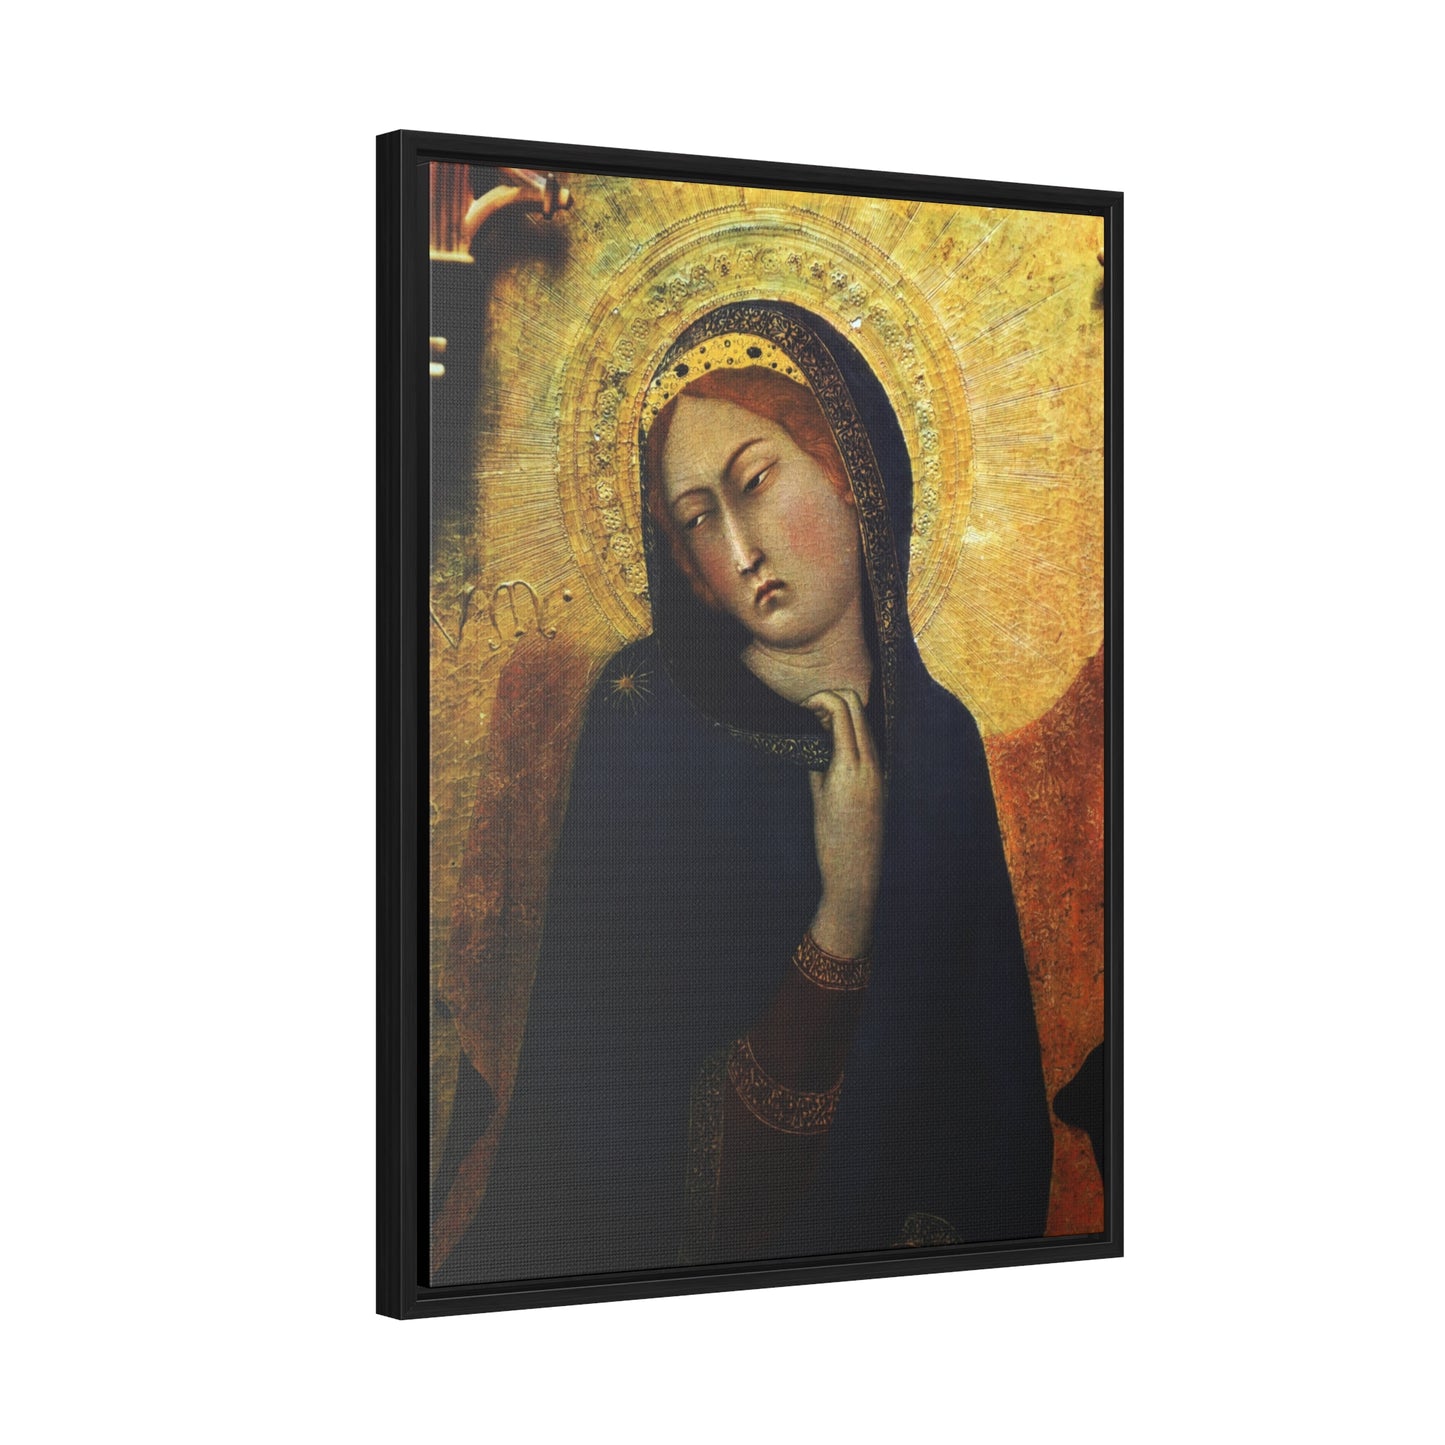 Annunciation of the Virgin Mary Canvas - Sanctus Art Gallery